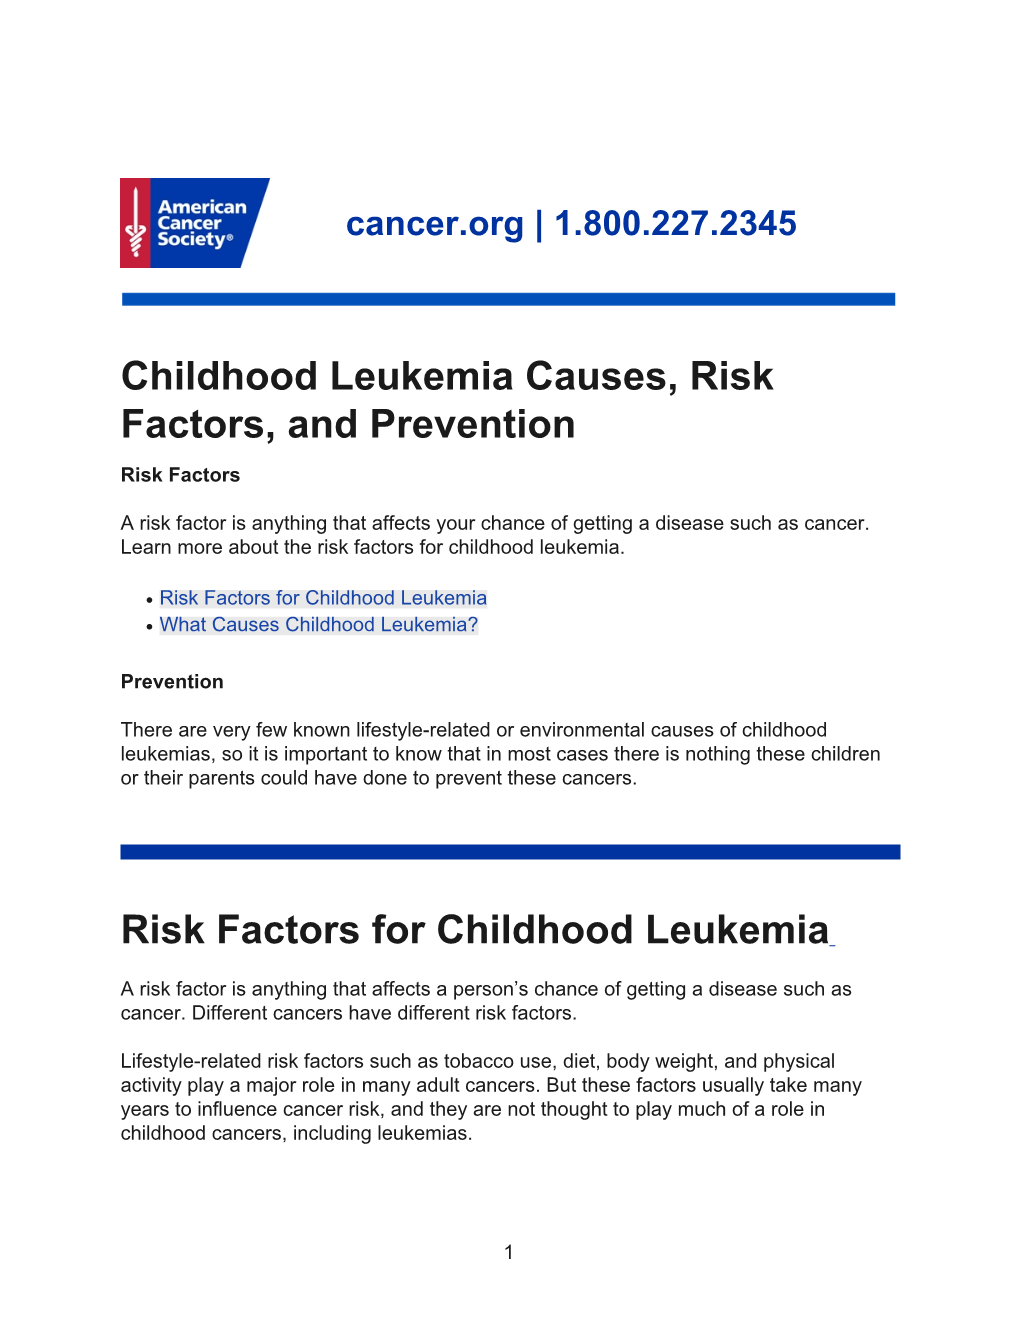 Risk Factors for Childhood Leukemia